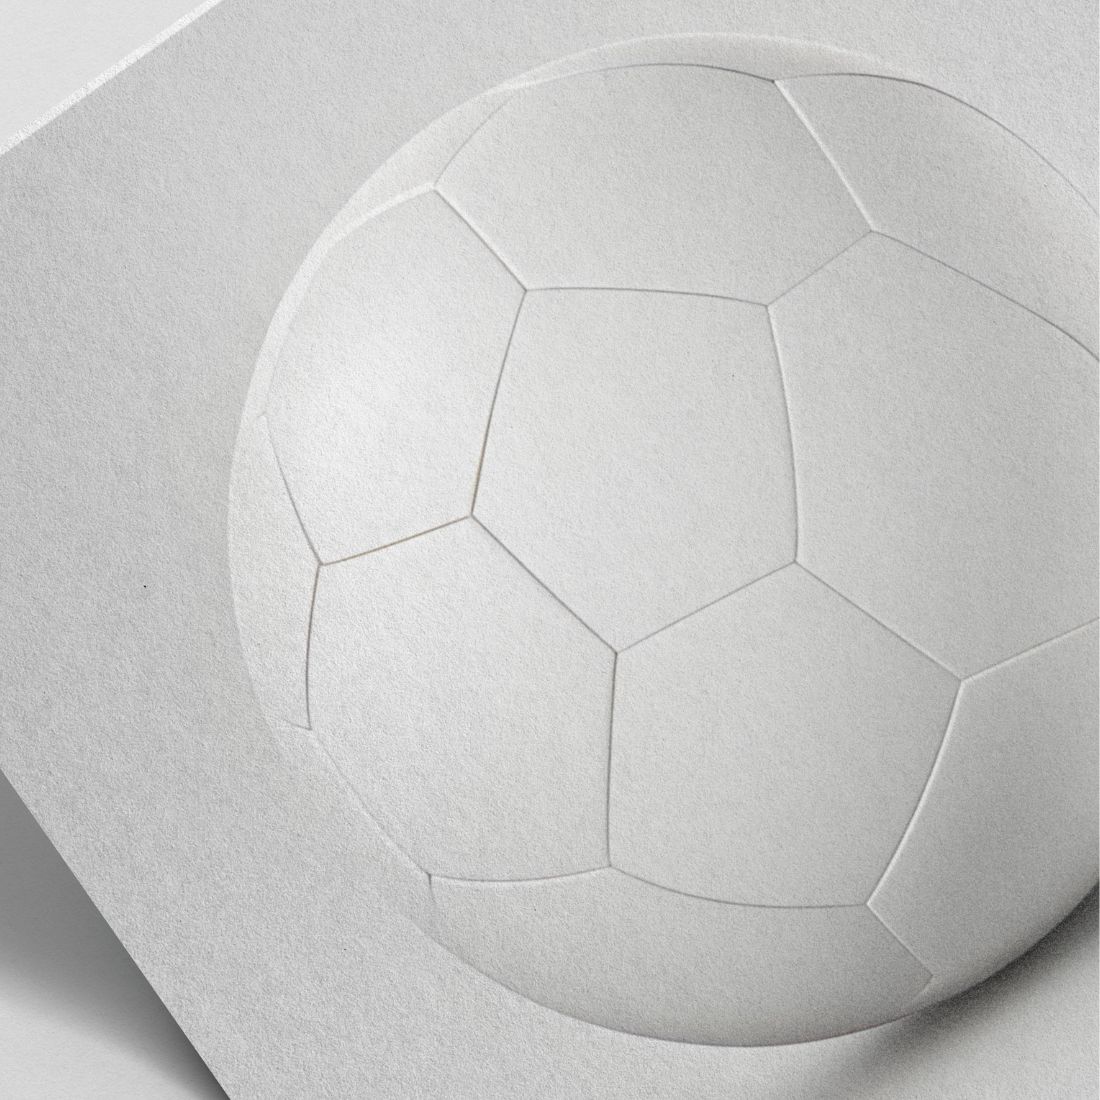 Ball Logo preview image.